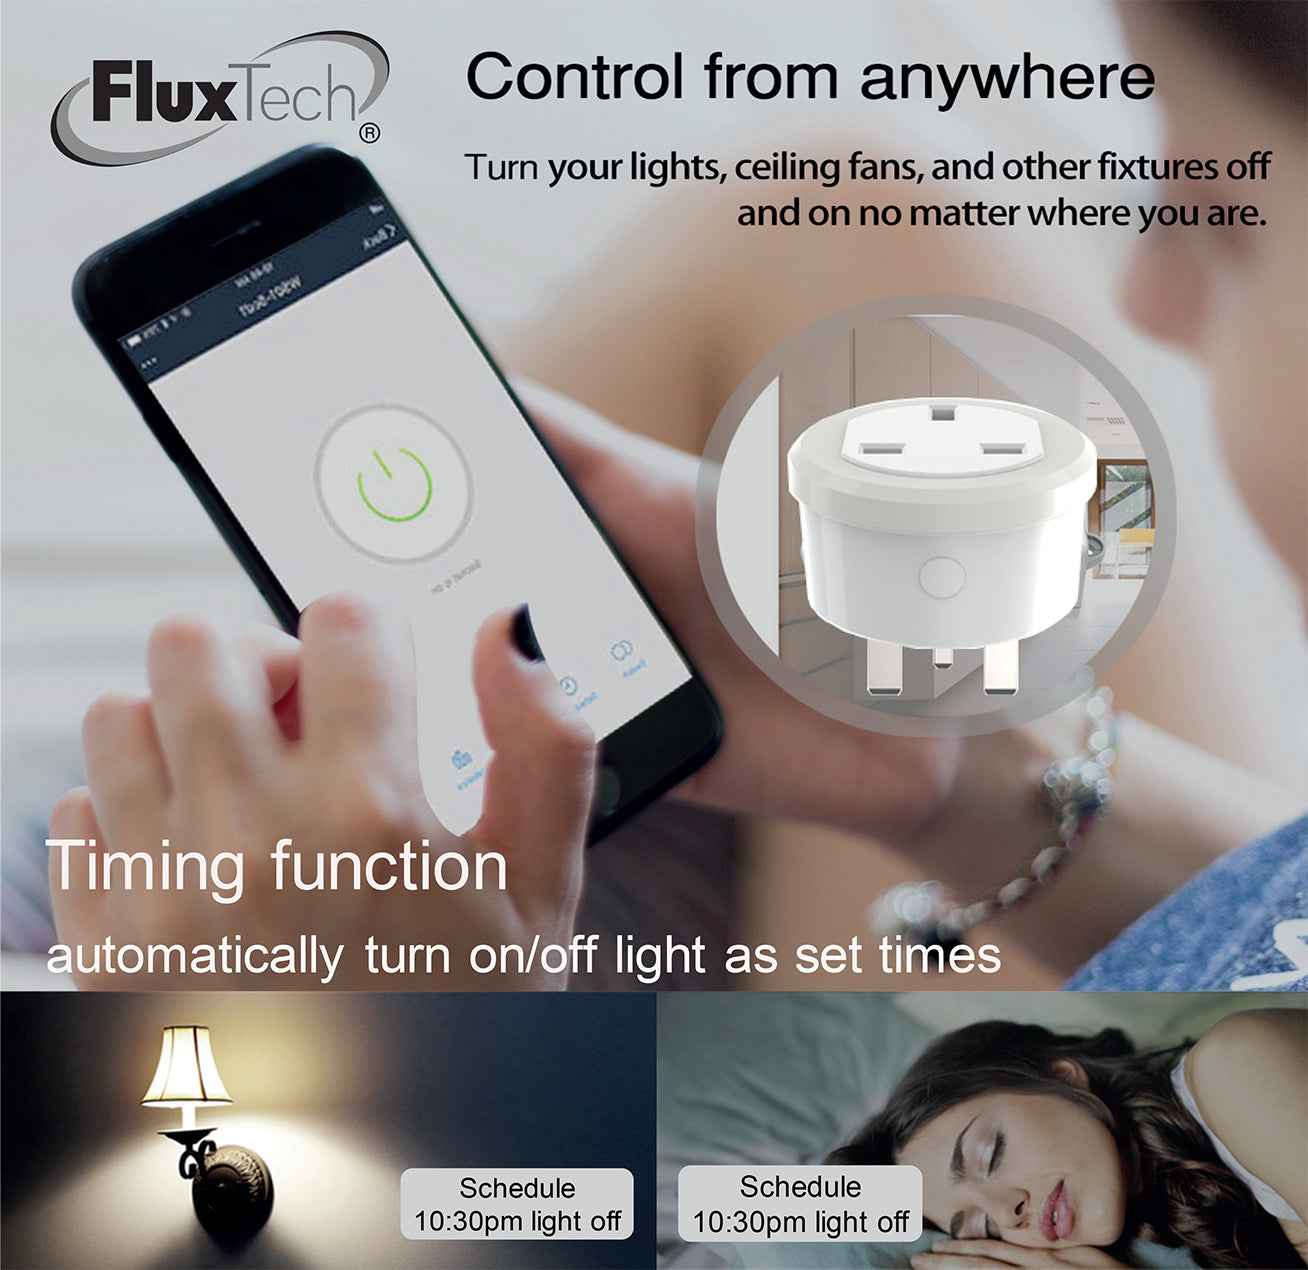 1pc Smart Plug, Alexa Plug, Smart Life Wifi Plug With Remote And Voice  Control, Timer Plug(2.4ghz Only), White